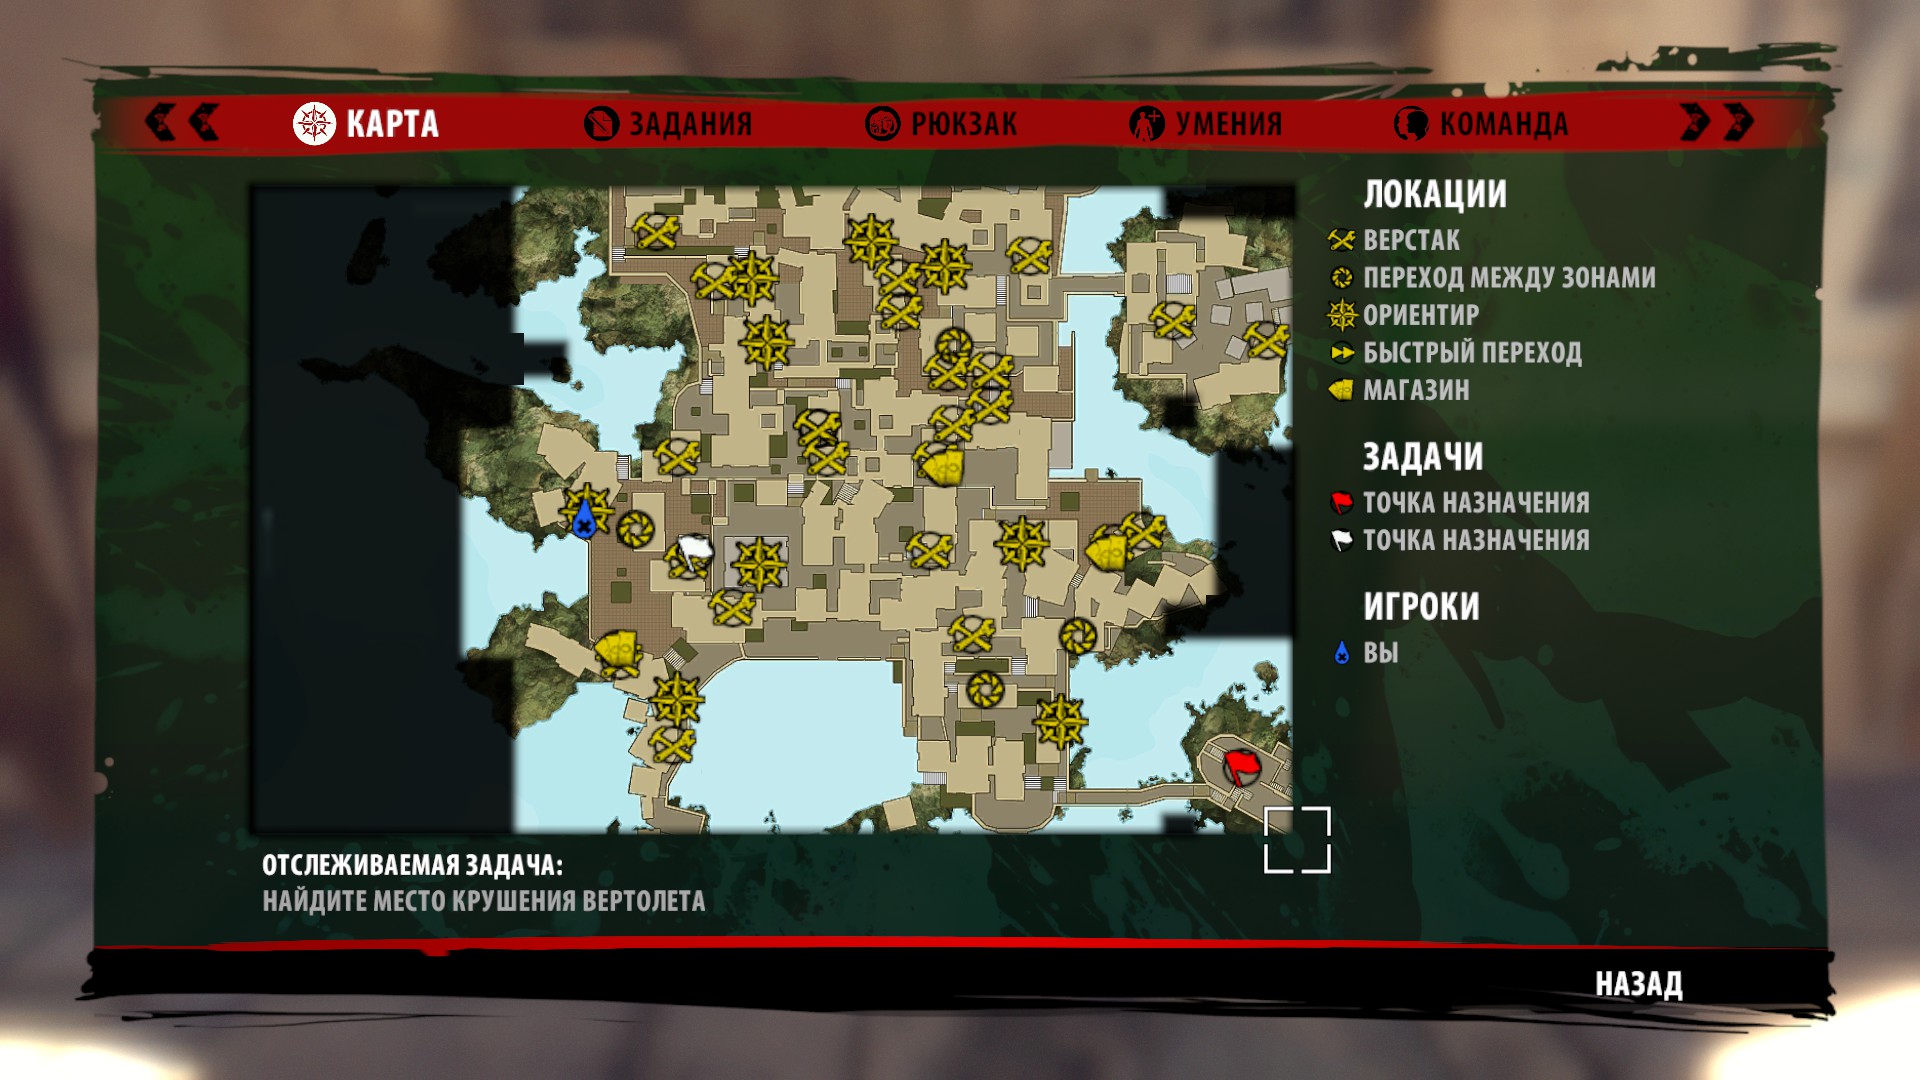 Dead island черепа. Dead Island Riptide карта. Dead Island ящики с оружием карта. Dead Island схемы модификаций оружия.